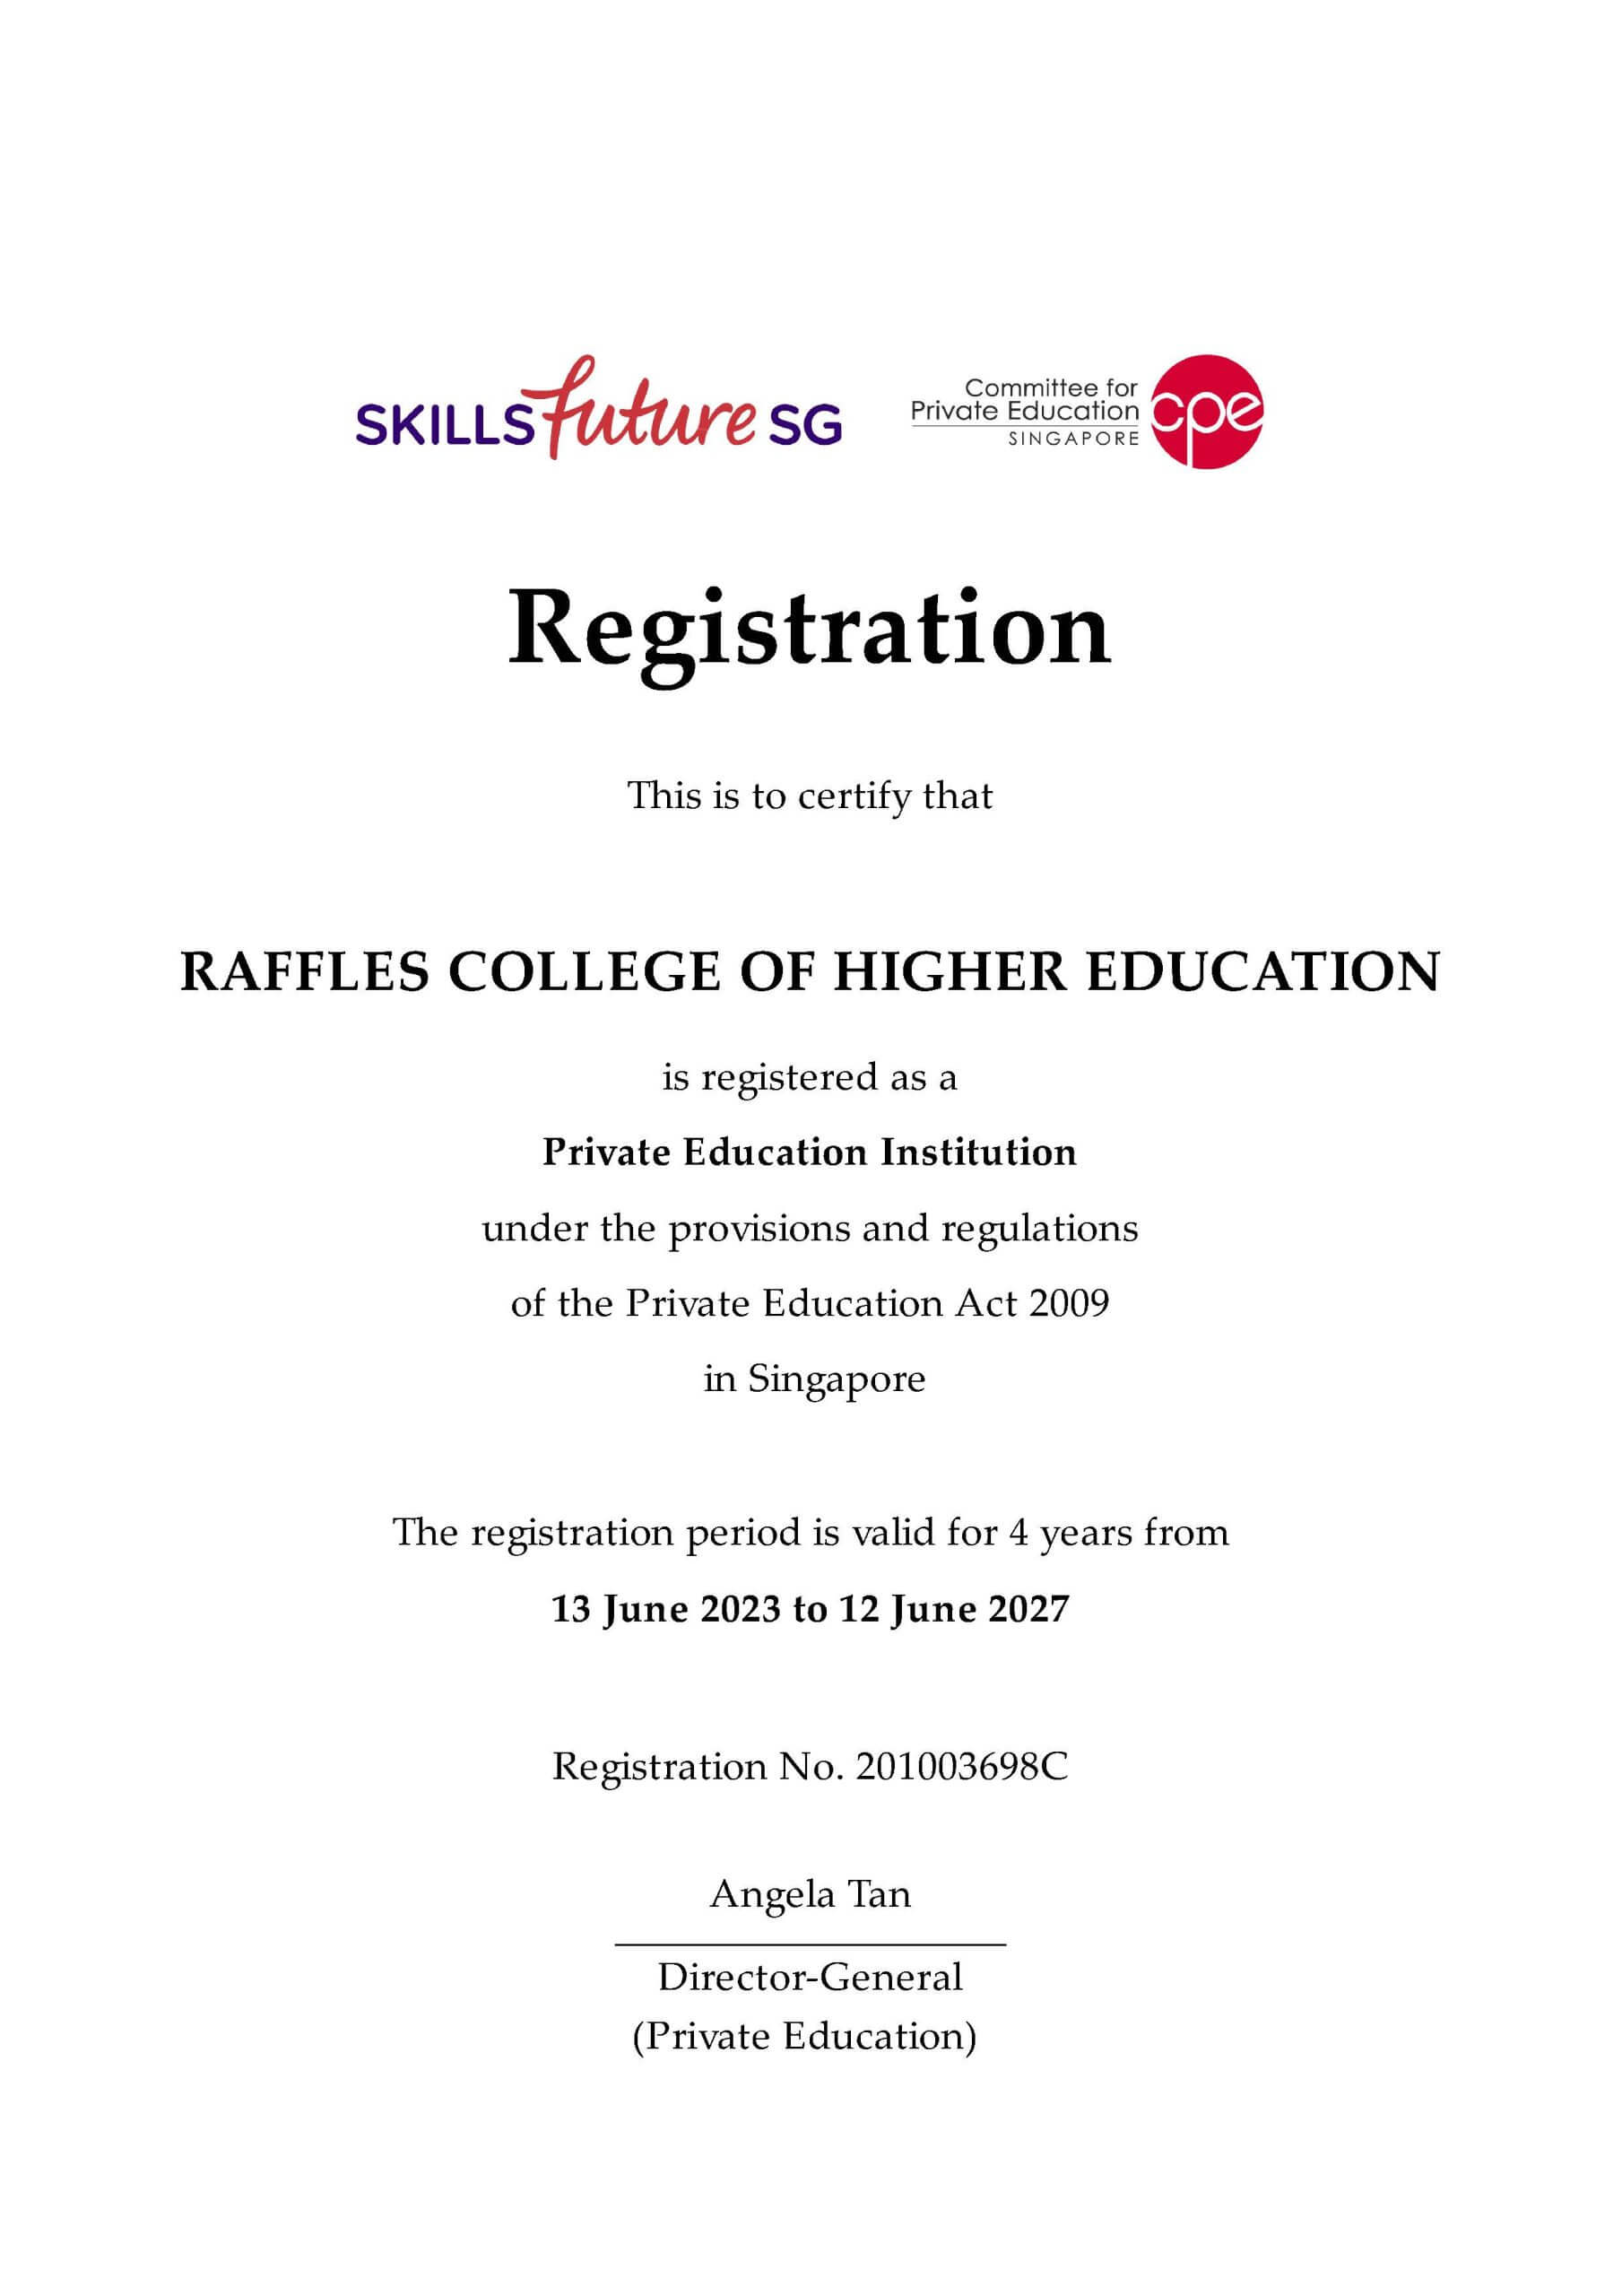 Skillfuture SG Registration PEI